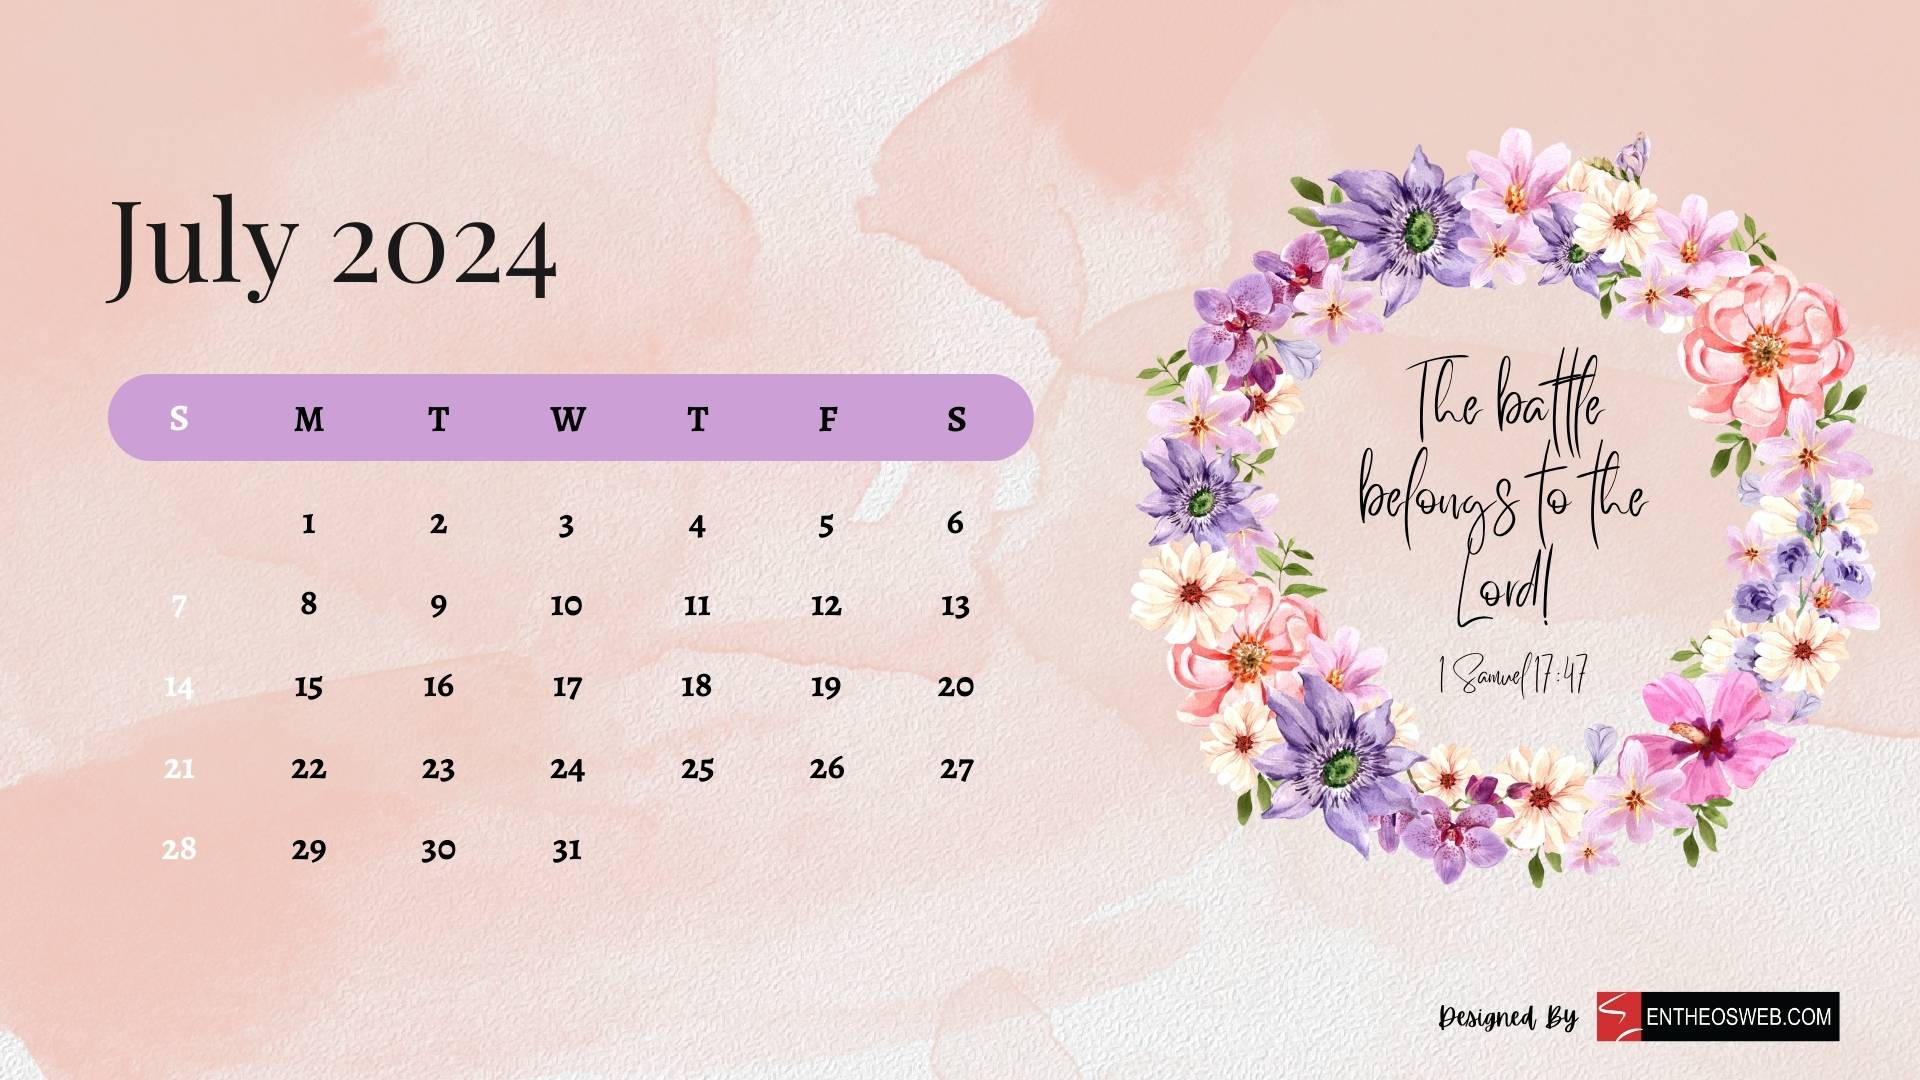 July 2024 Desktop Wallpaper Calendar | Entheosweb pertaining to July 2024 Calendar Desktop Wallpaper